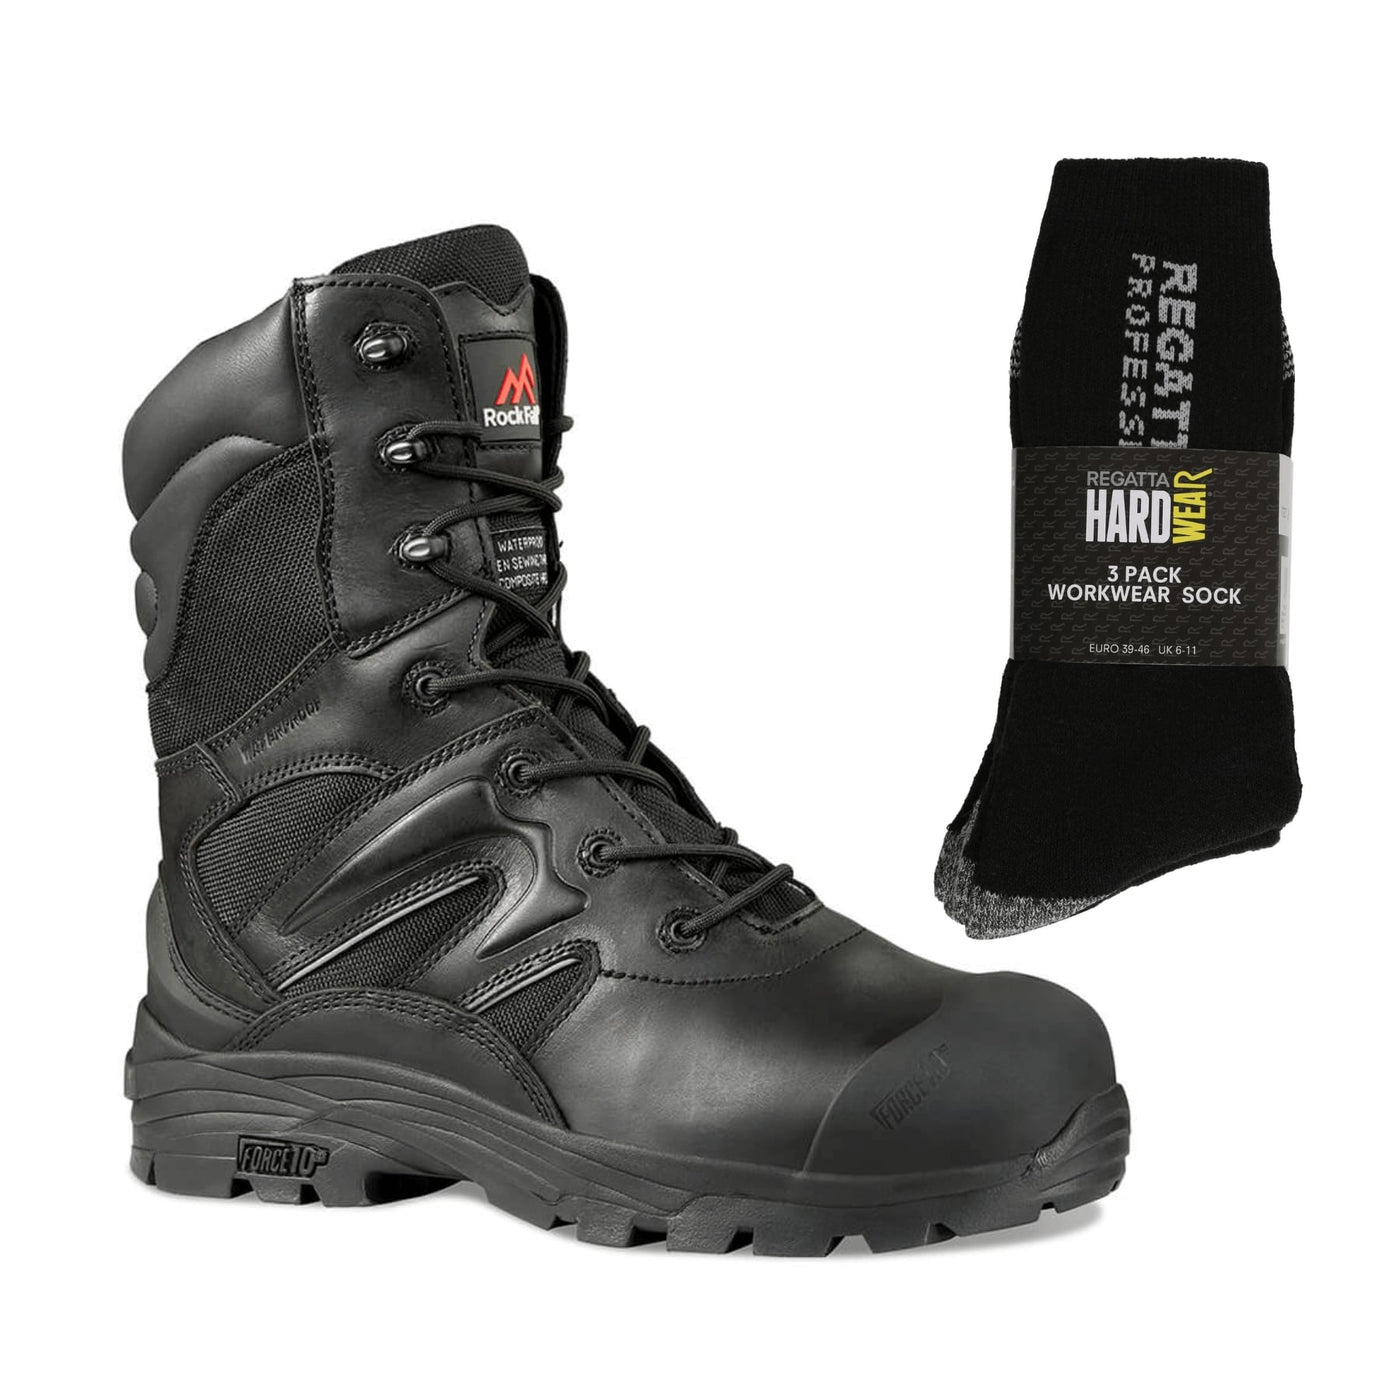 RockFall Special Offer Monzonite RF540 Pack - High Leg Waterproof Work Boots with Side Zip + 3 Pairs Work Socks